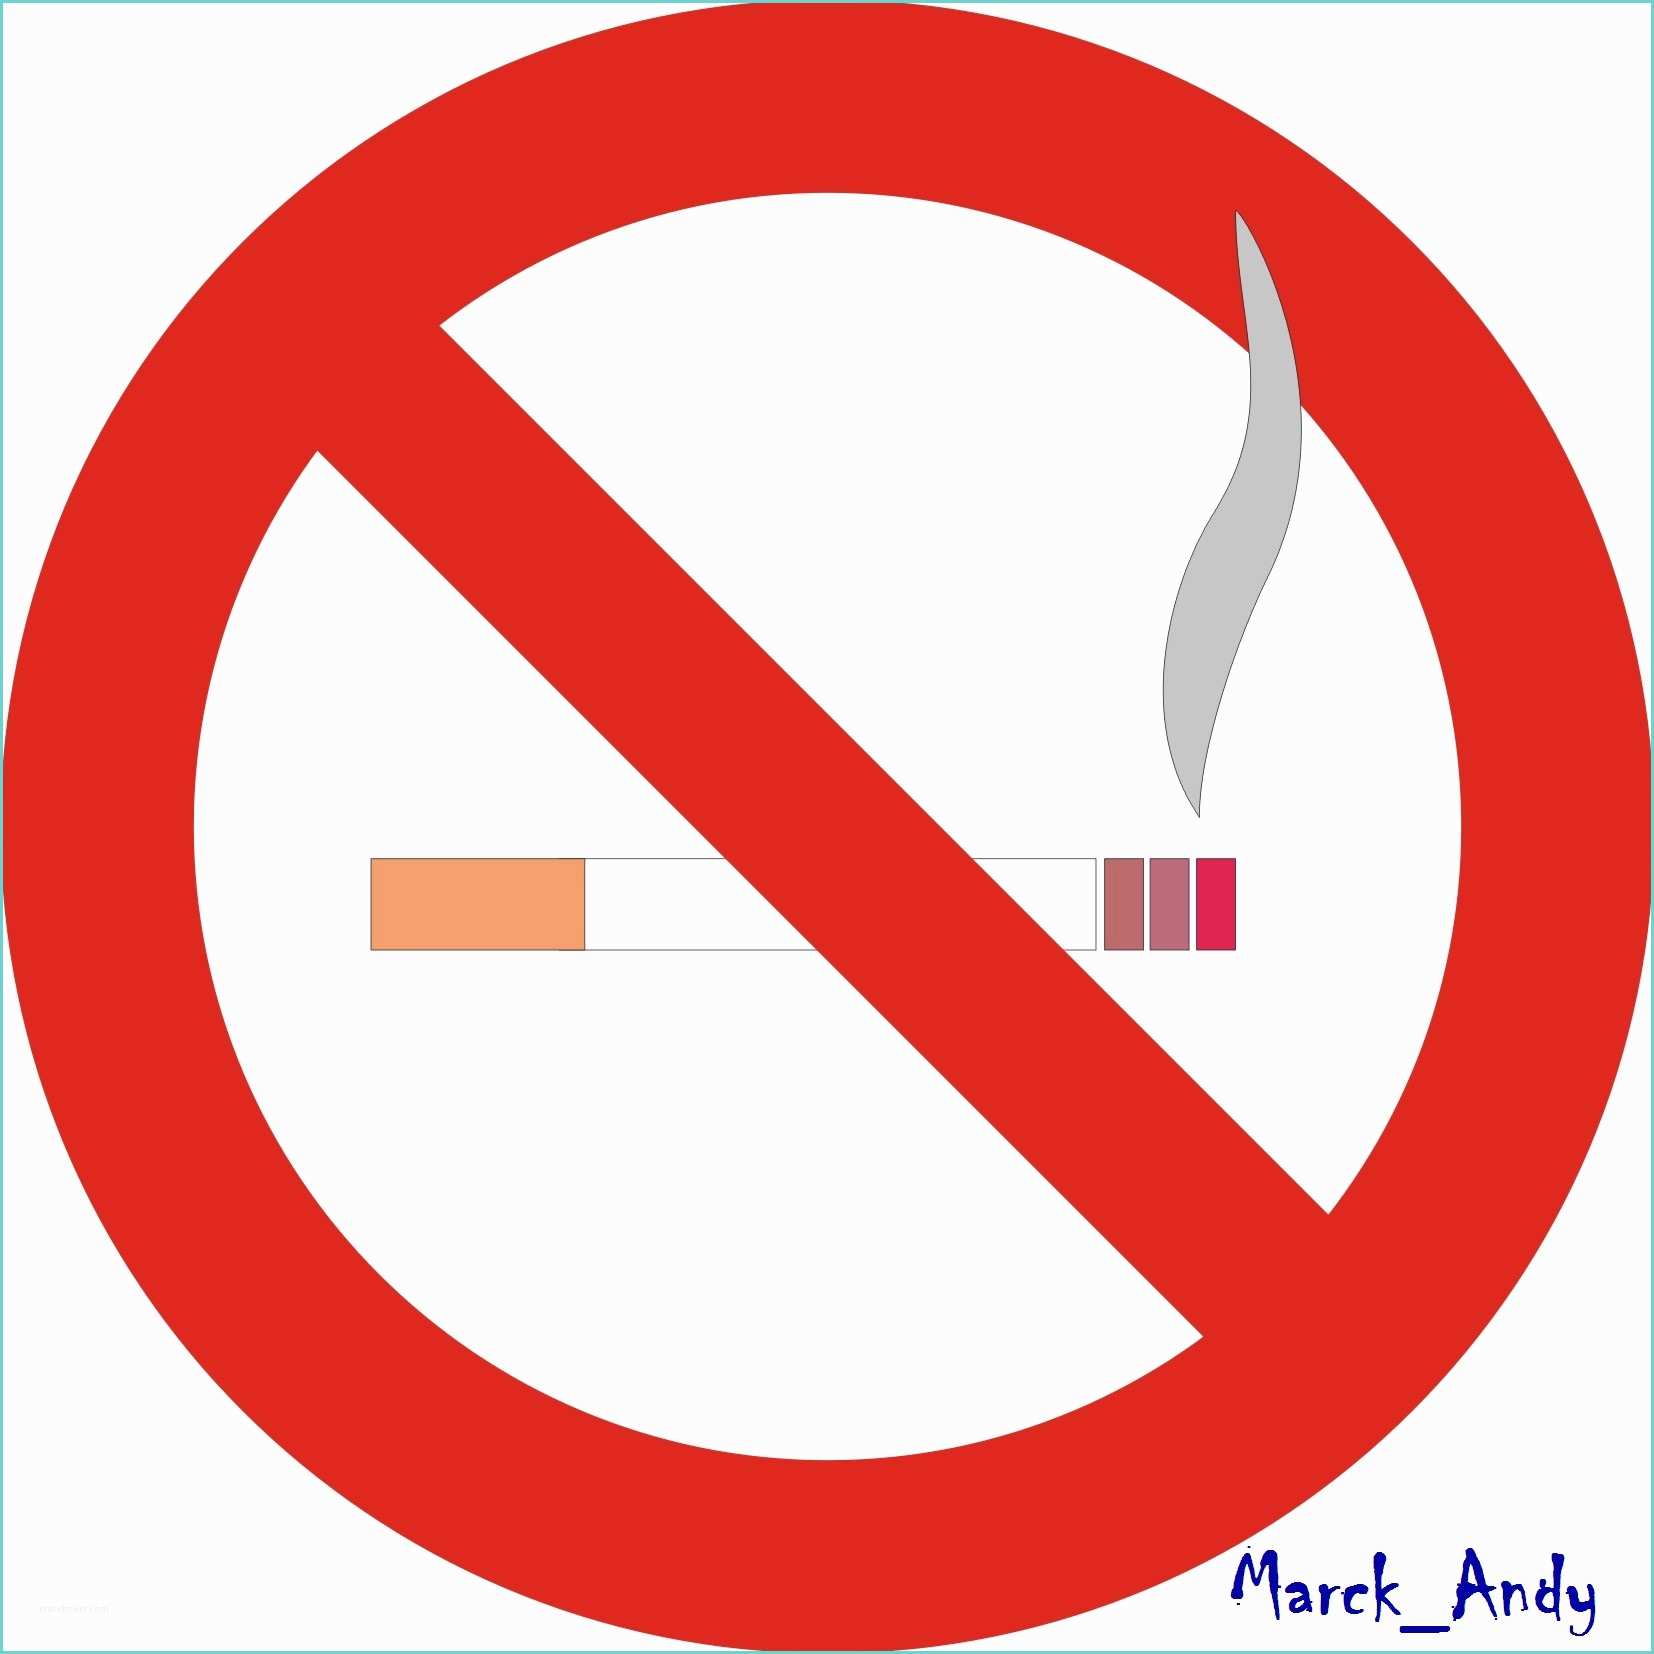 Image Interdiction De Fumer Mesure D’interdiction De Fumer Dans Les Lieux Publics En